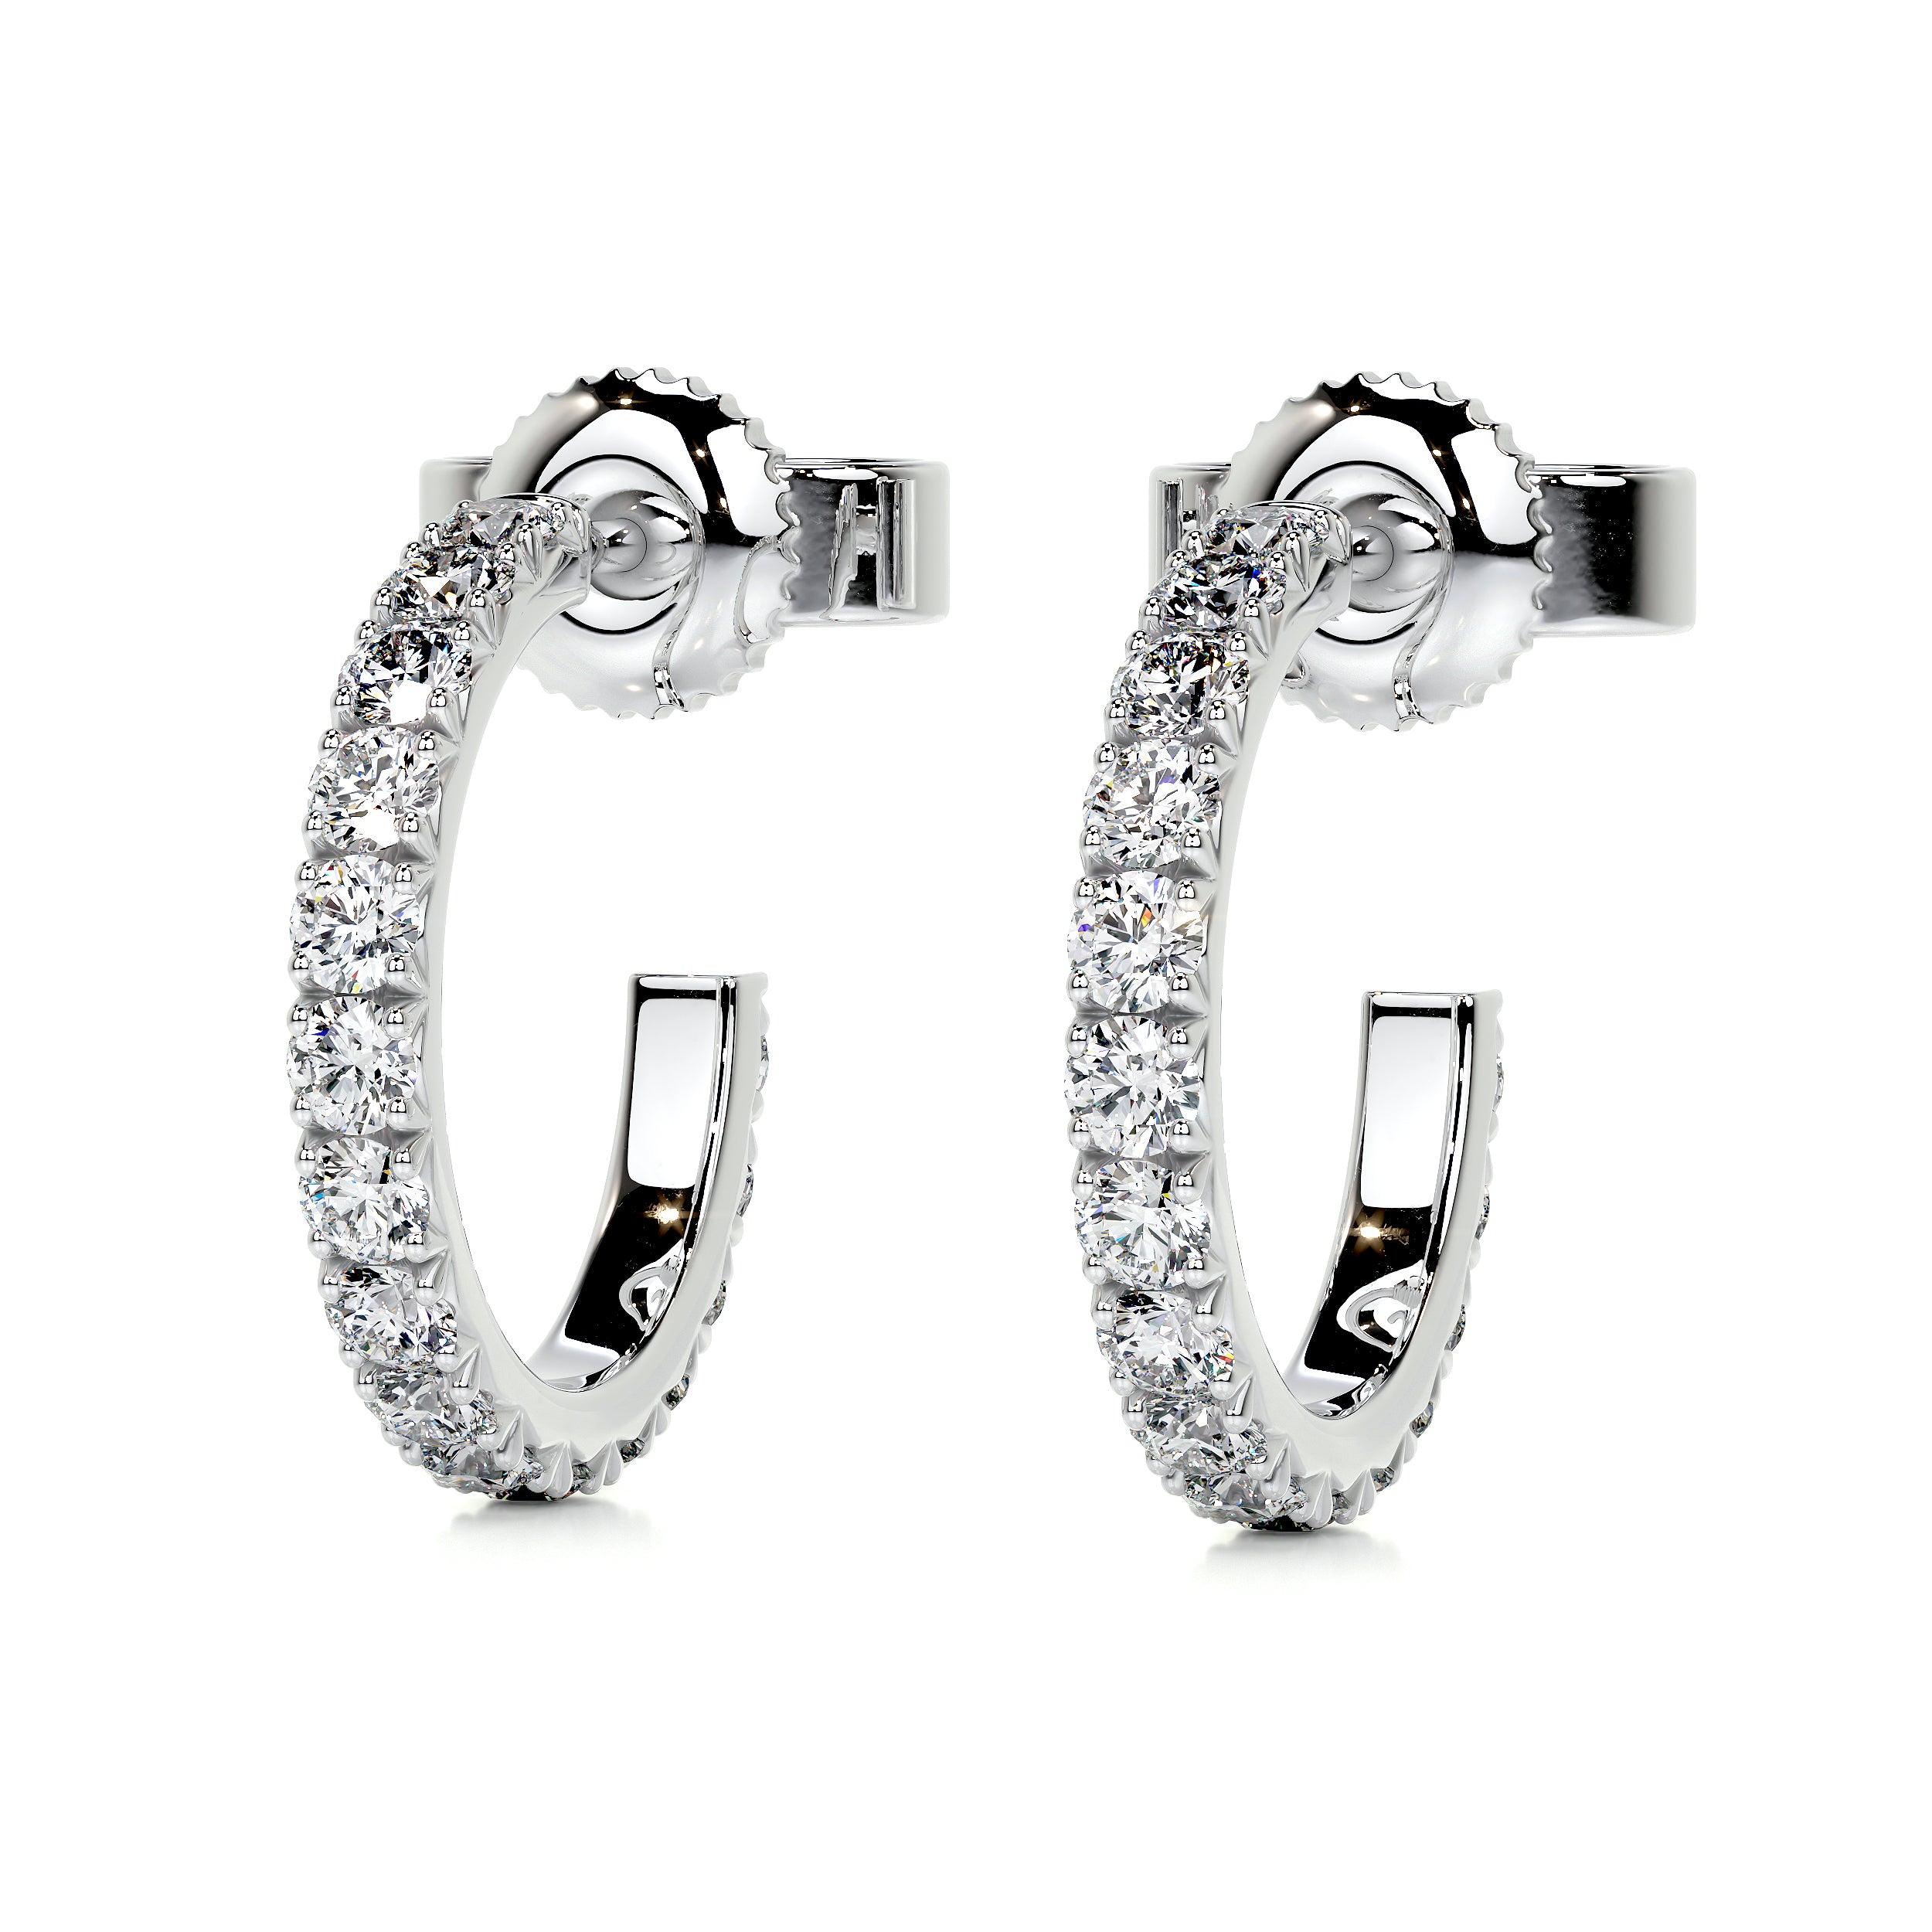 Nicole Diamond Earrings   (3 Carat) -18K White Gold